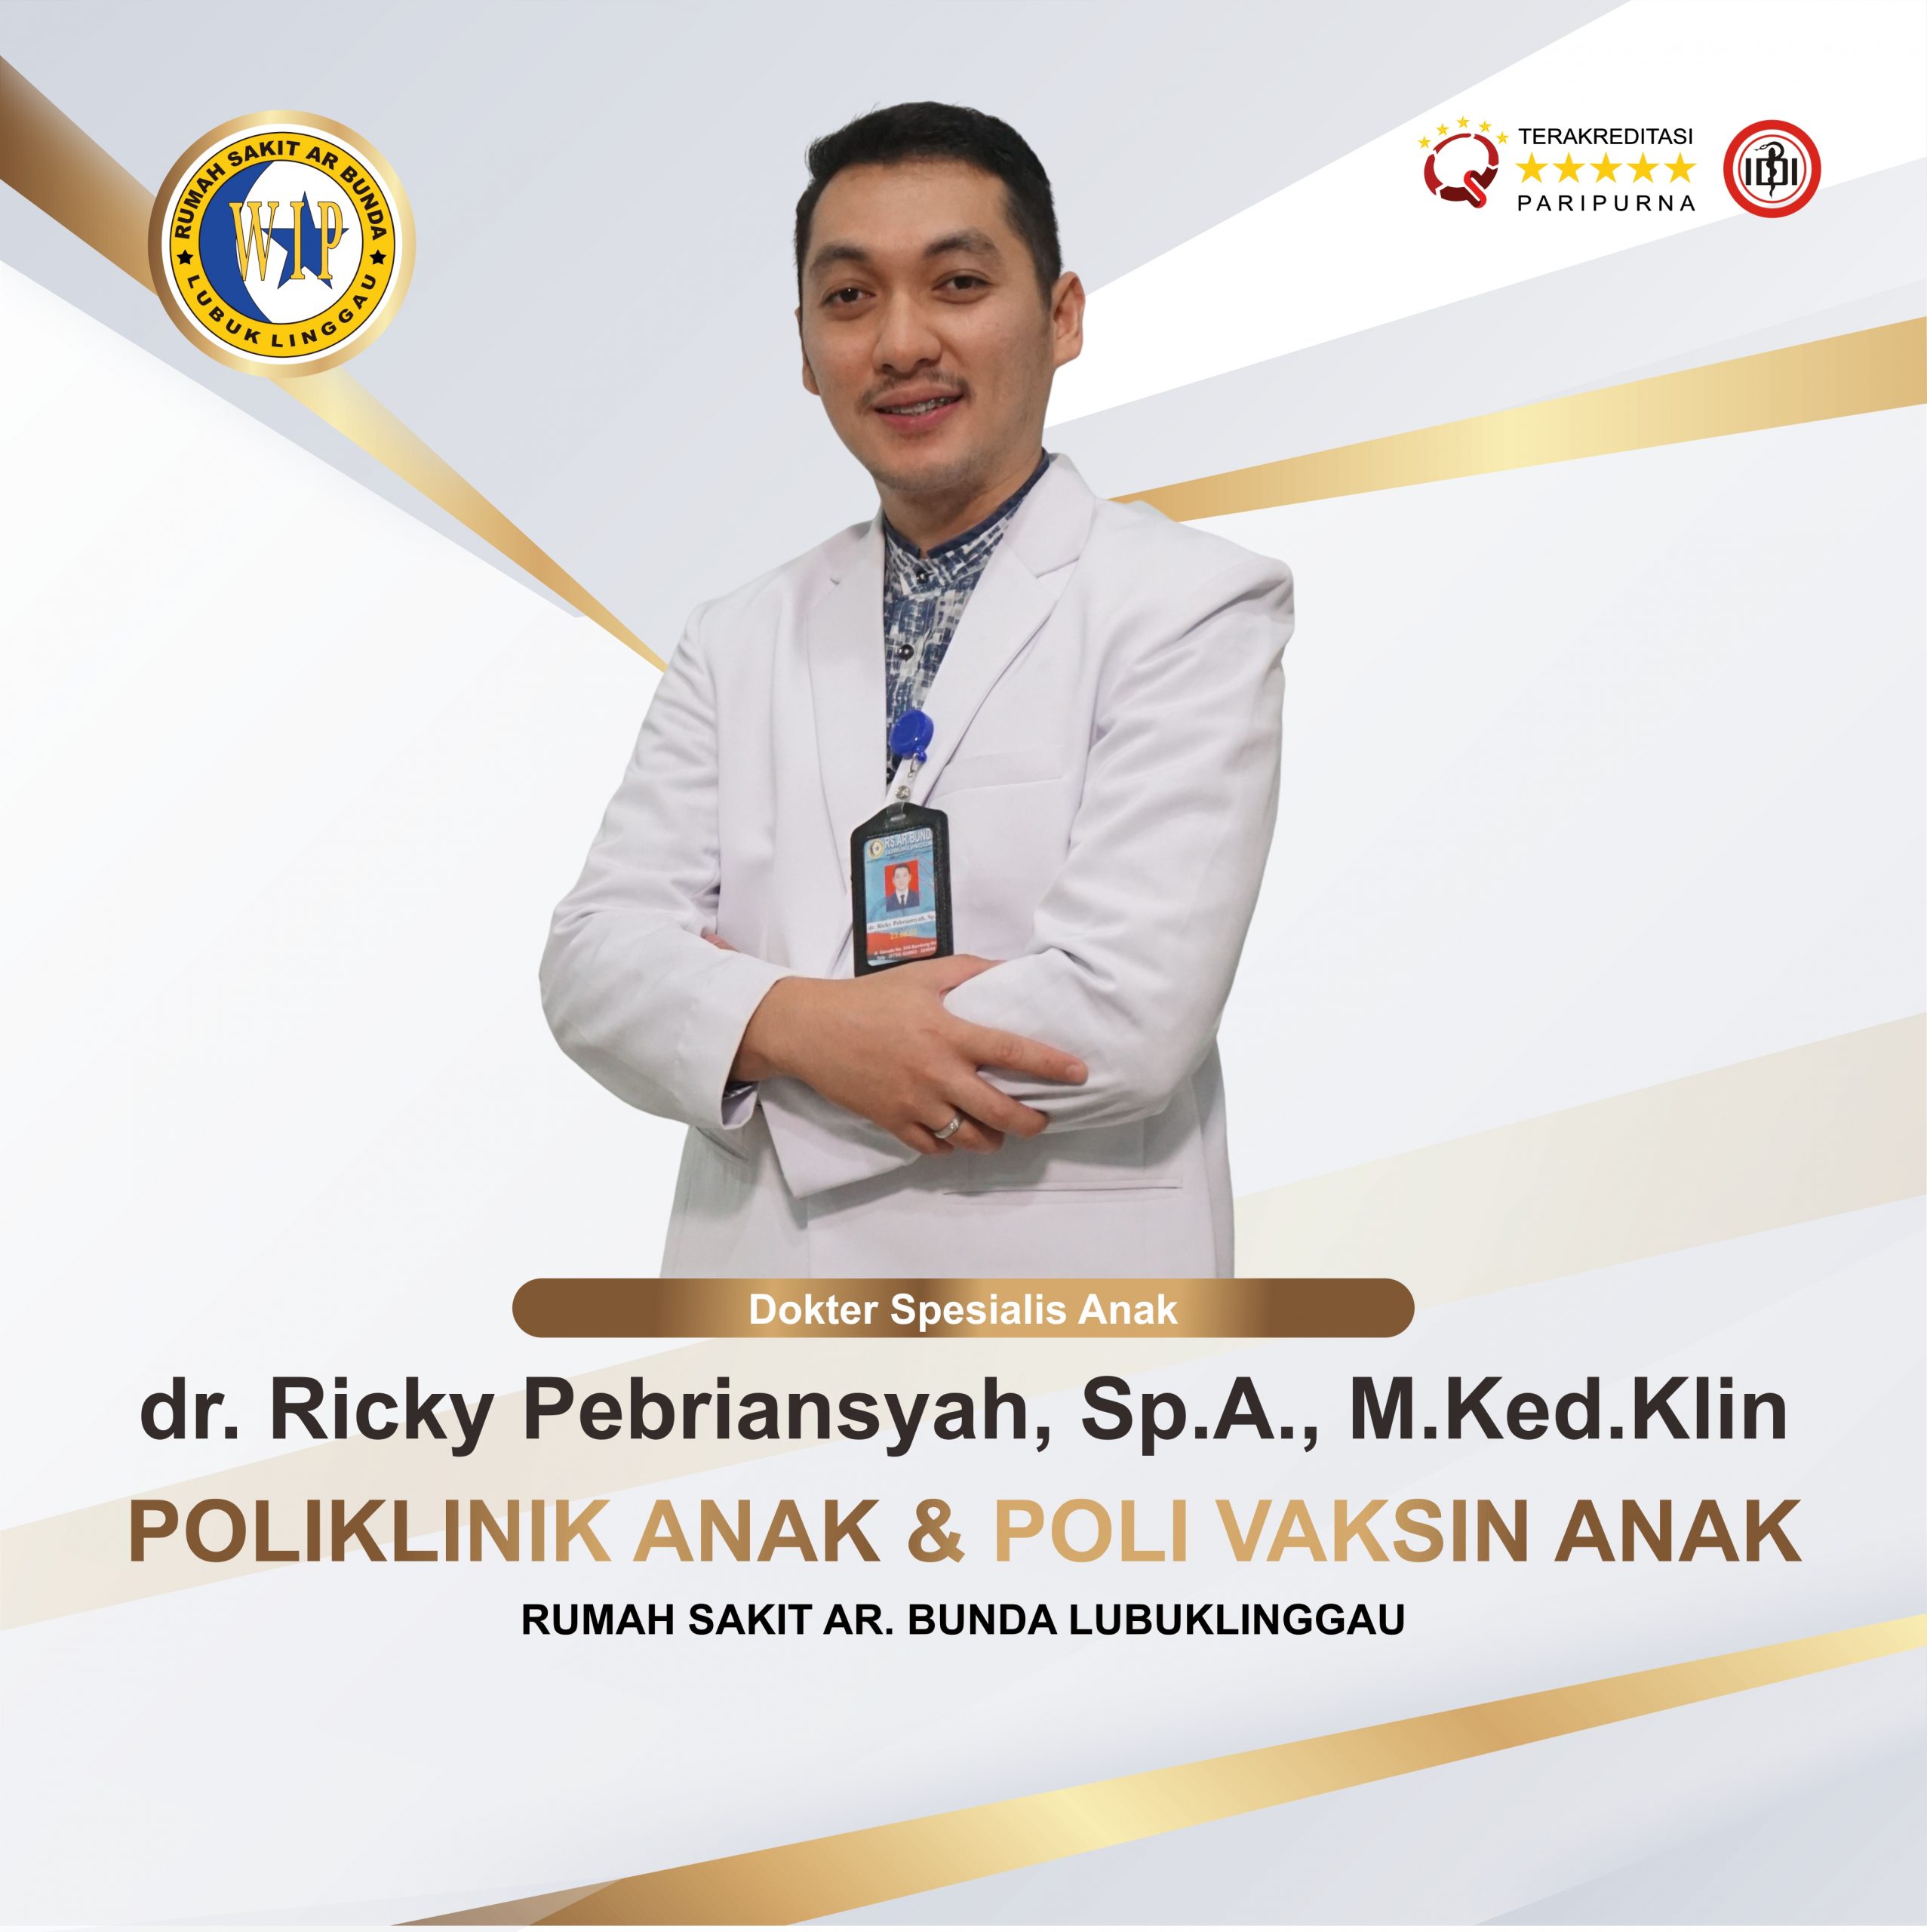 dr. Ricky Pebriansyah, Sp.A., M.Ked.Klin